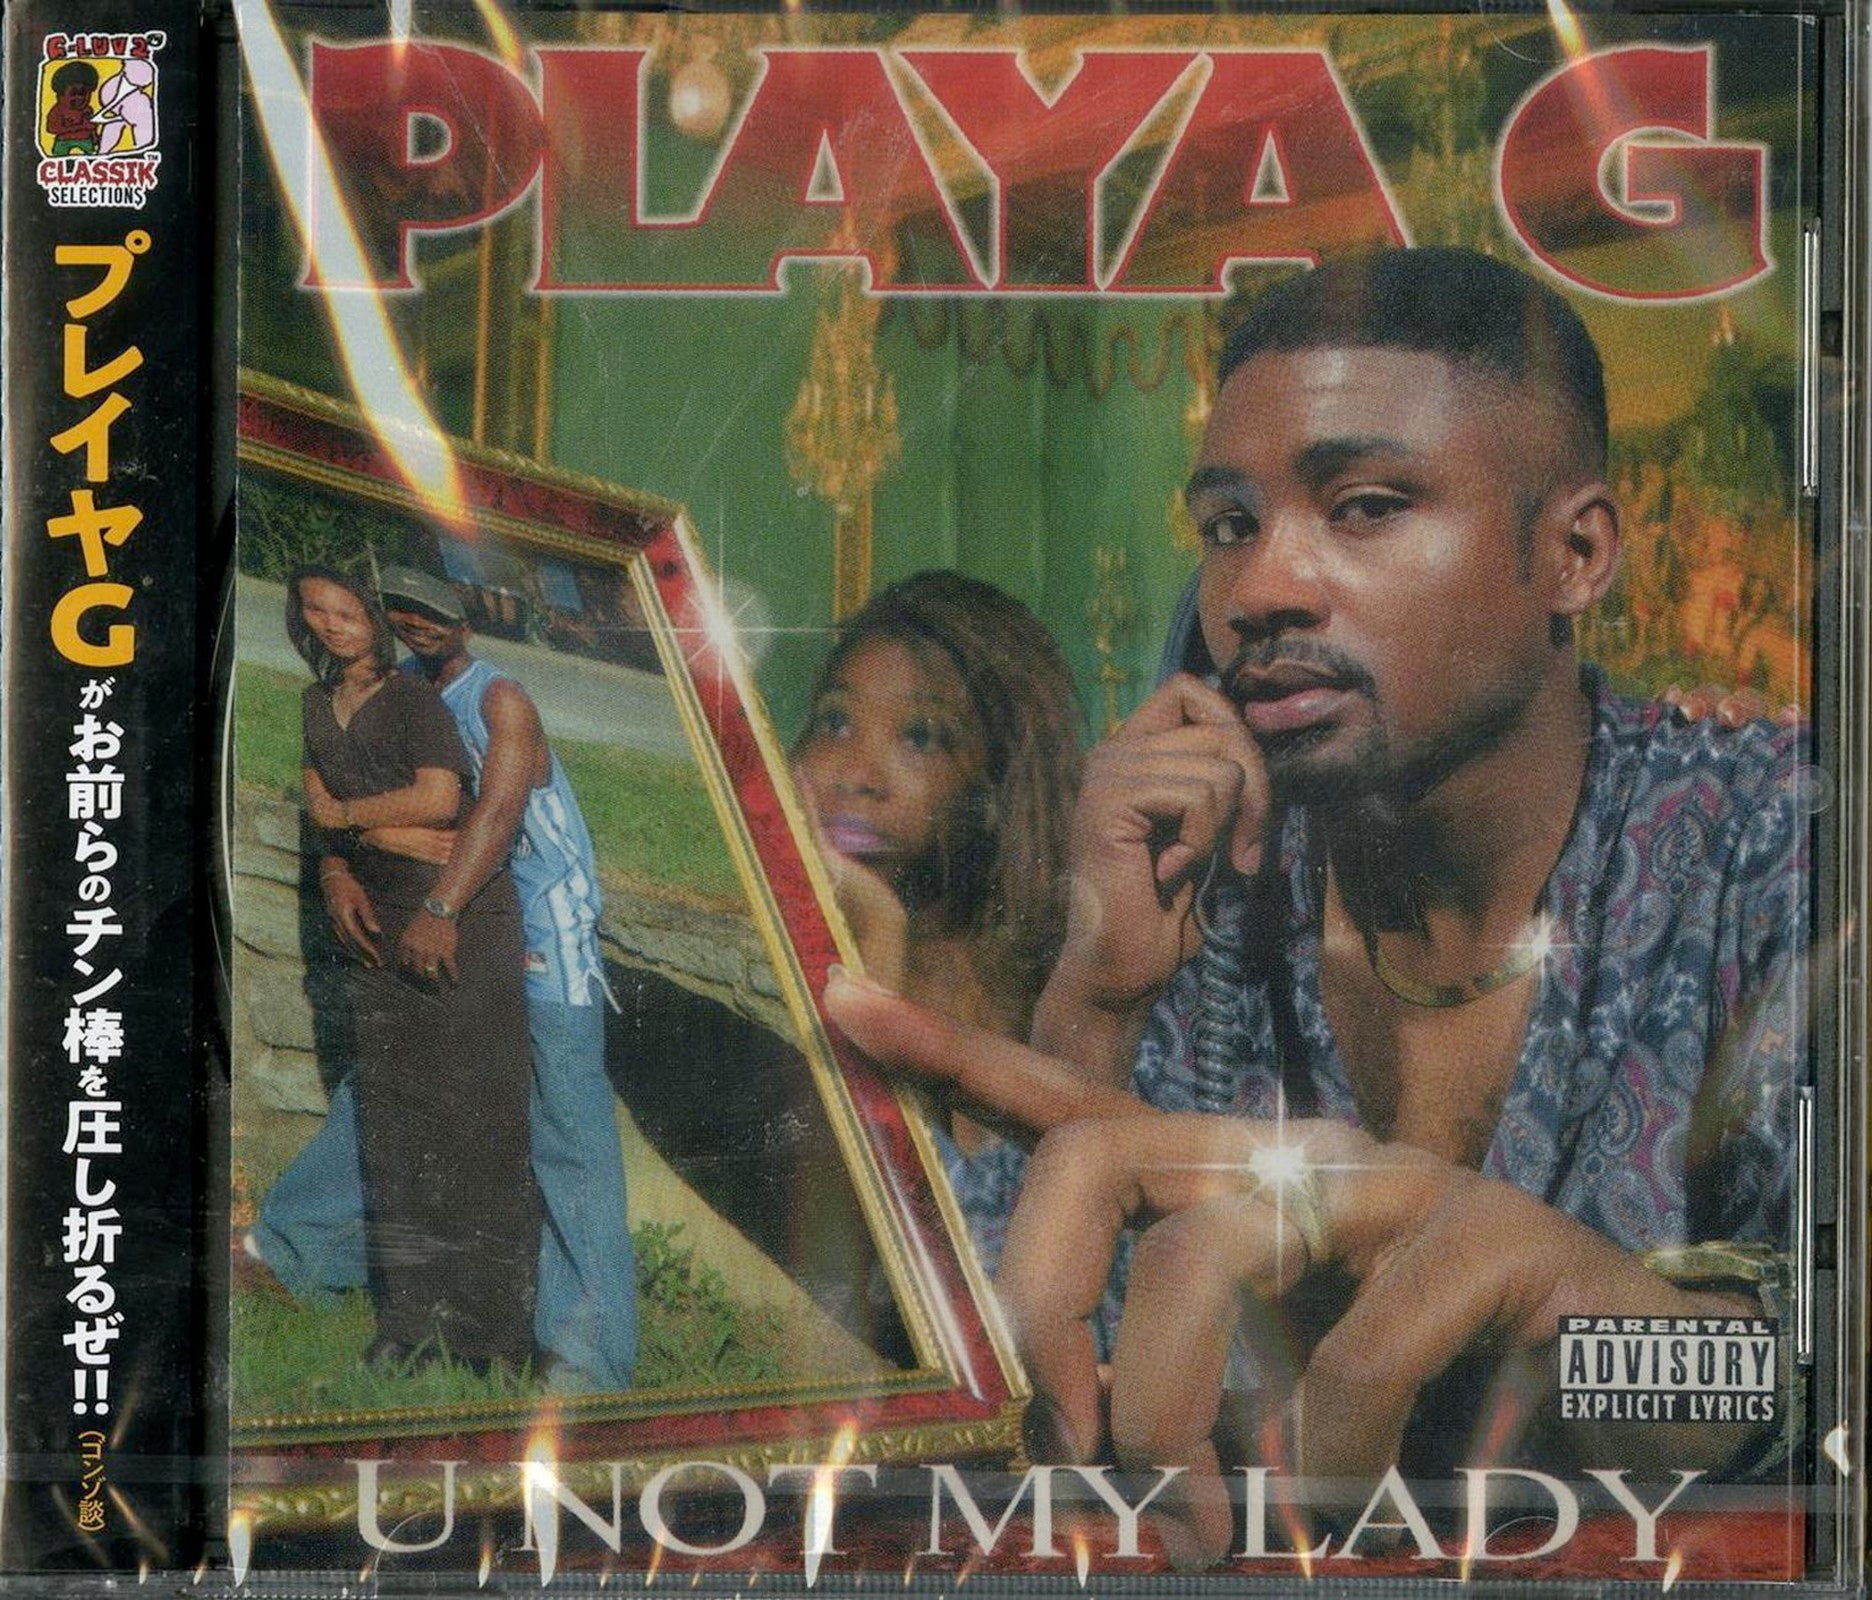 Playa G - U Not My Lady - Japan CD – CDs Vinyl Japan Store CD,  Gangsta/Hardcore, Playa G, Rap & Hip-Hop CDs